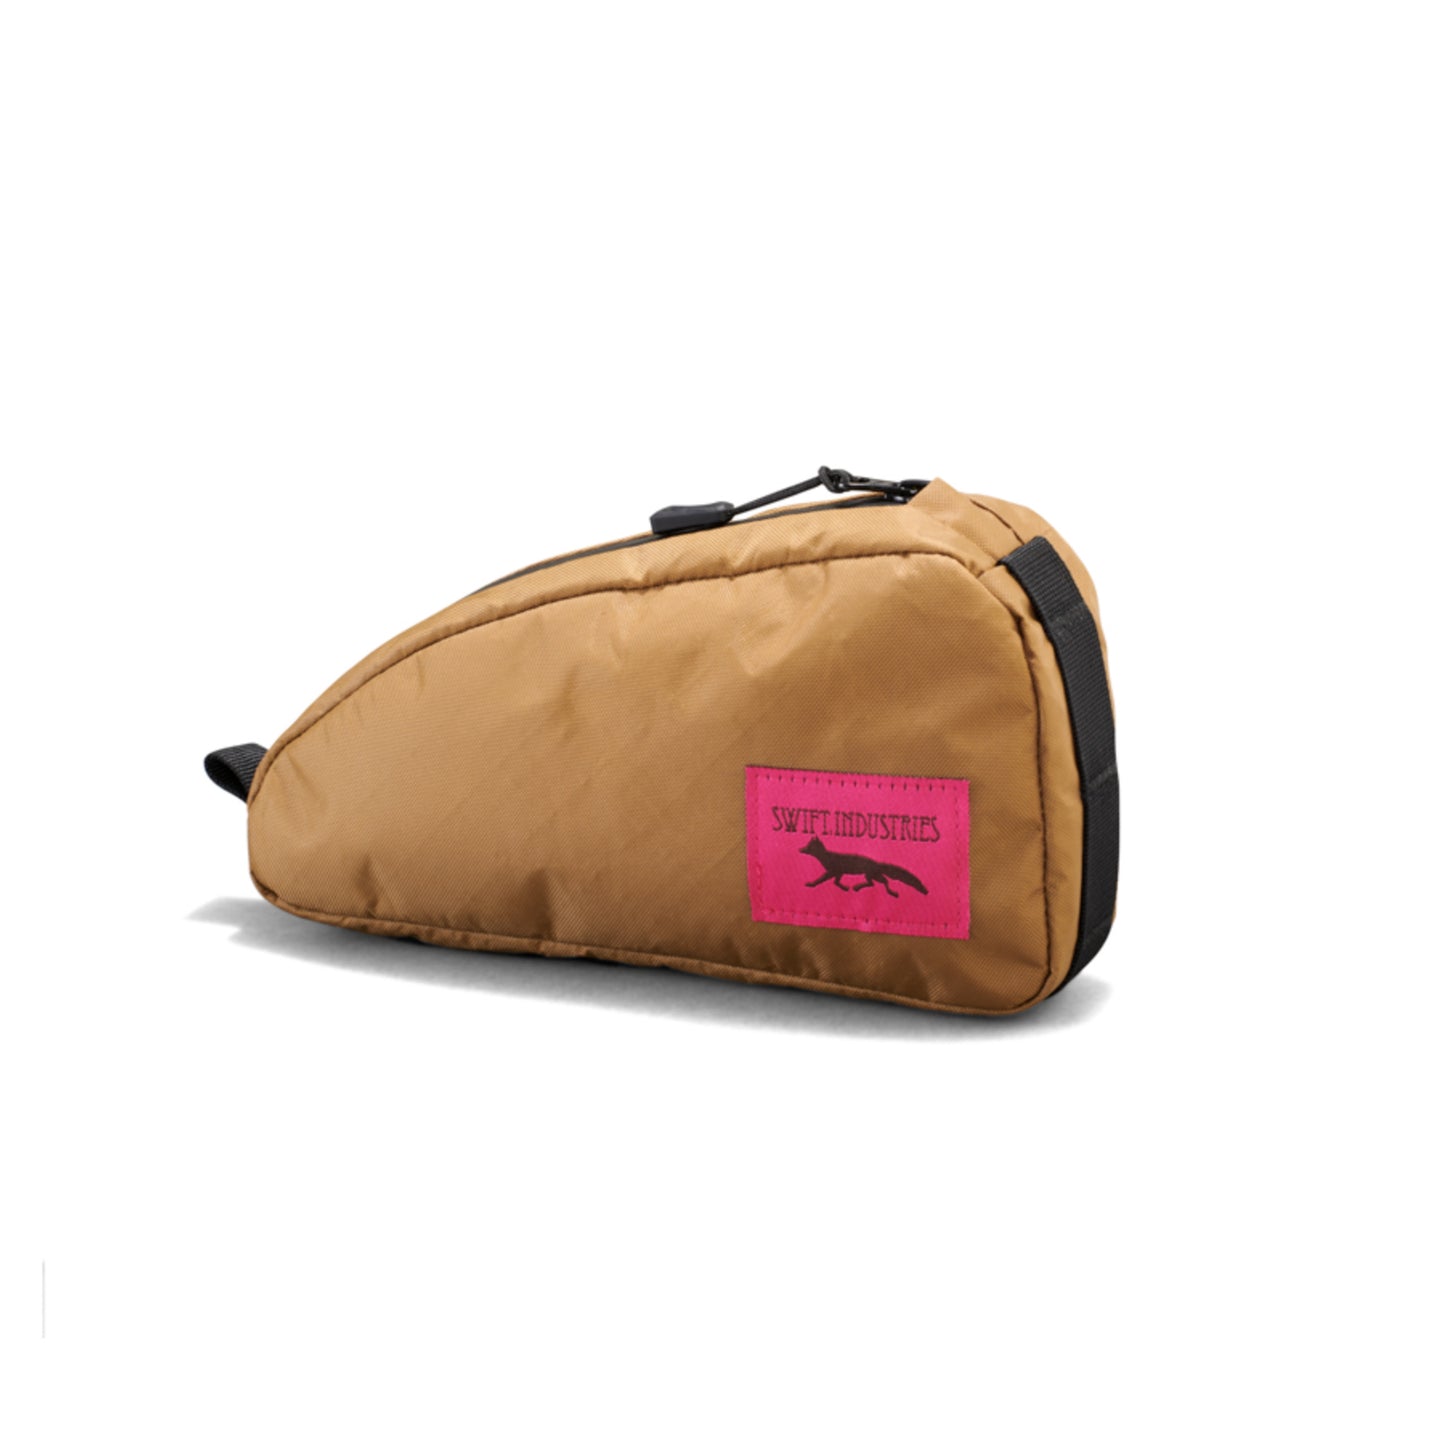 Swift Industries Moxie Top Tube Bag